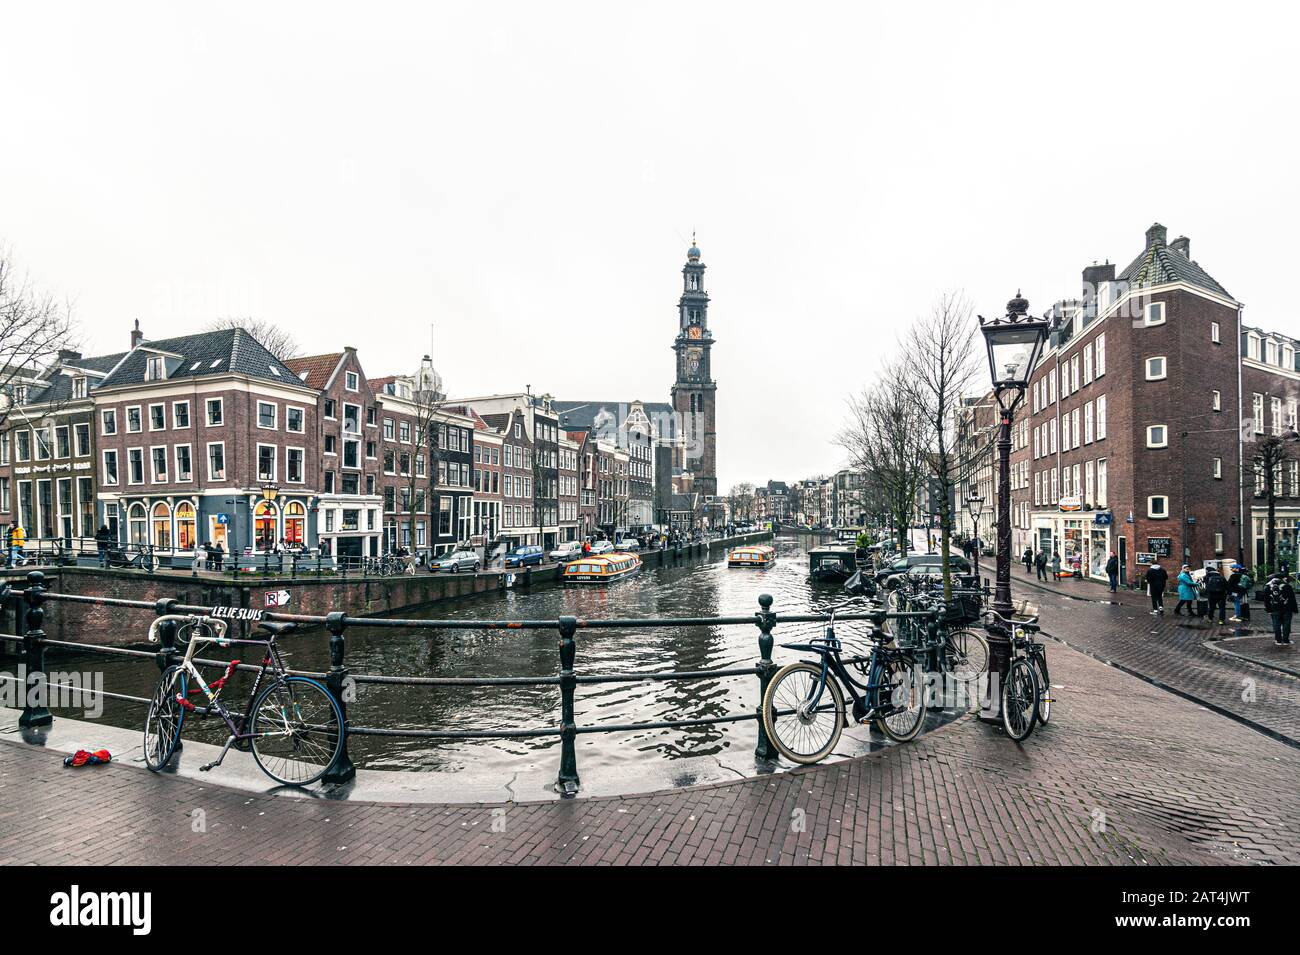 Murky Amsterdam day, December 2019 Stock Photo